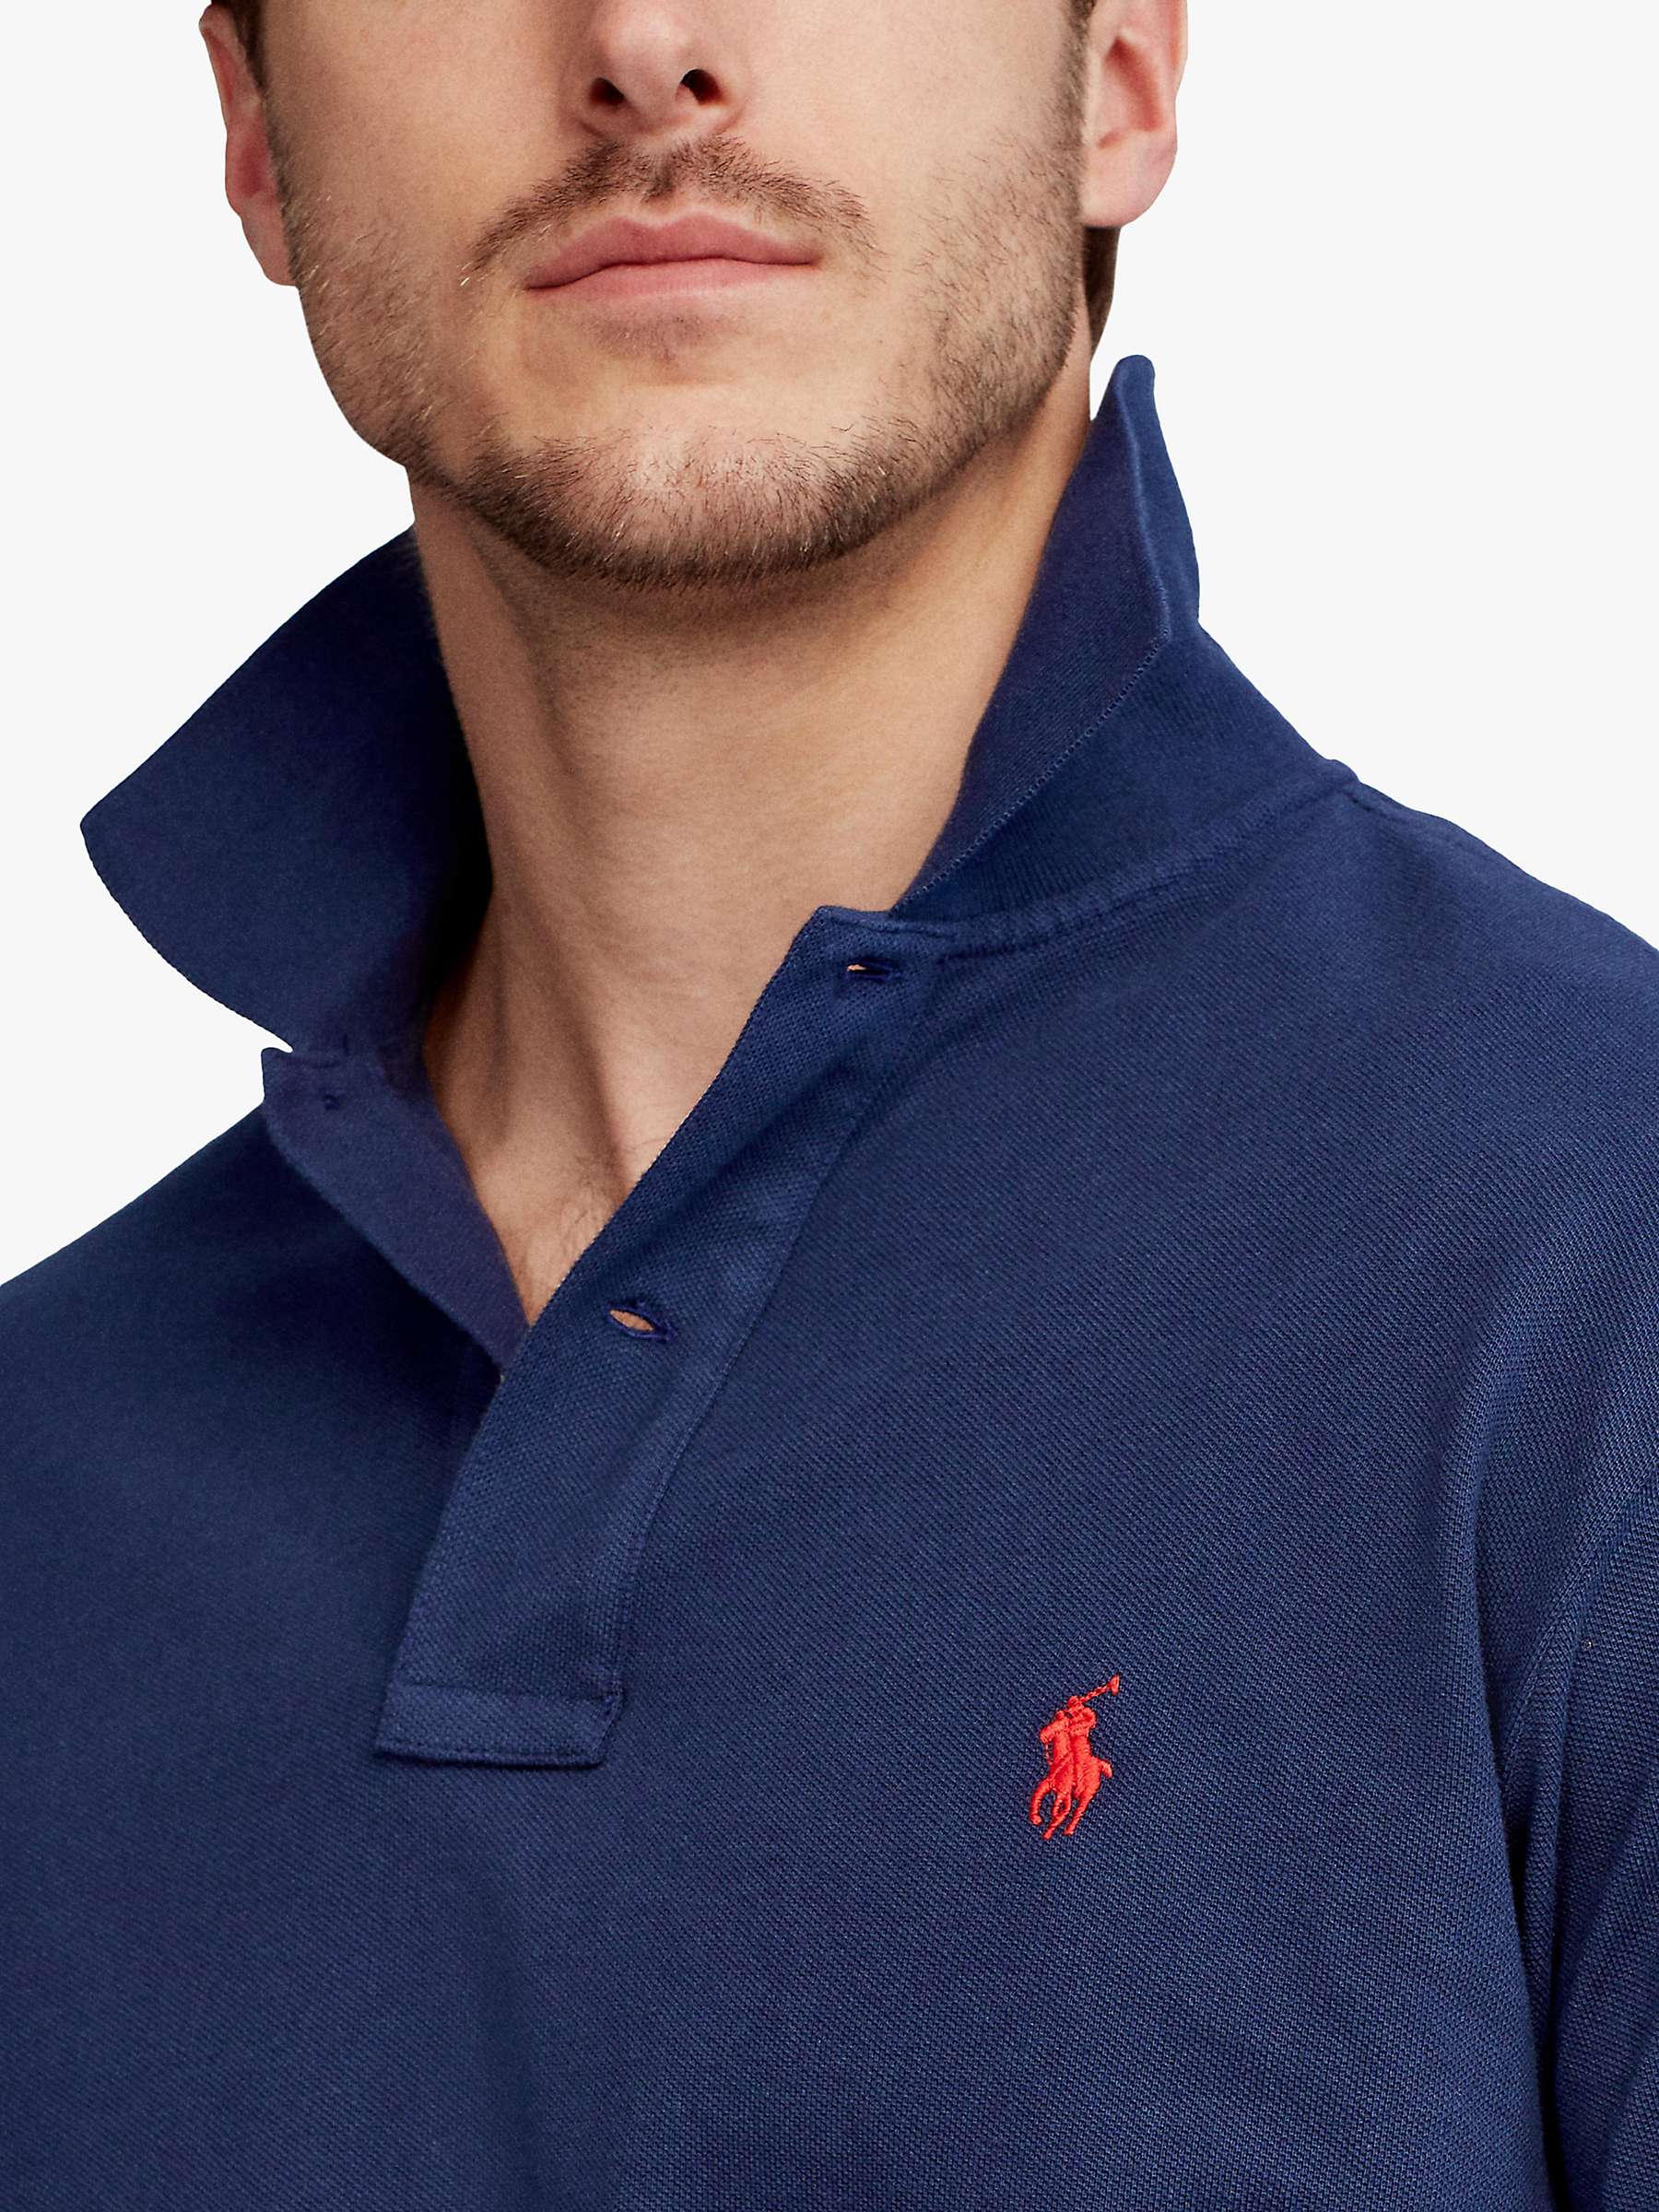 Buy Polo Ralph Lauren Big & Tall Regular Fit Polo Shirt Online at johnlewis.com